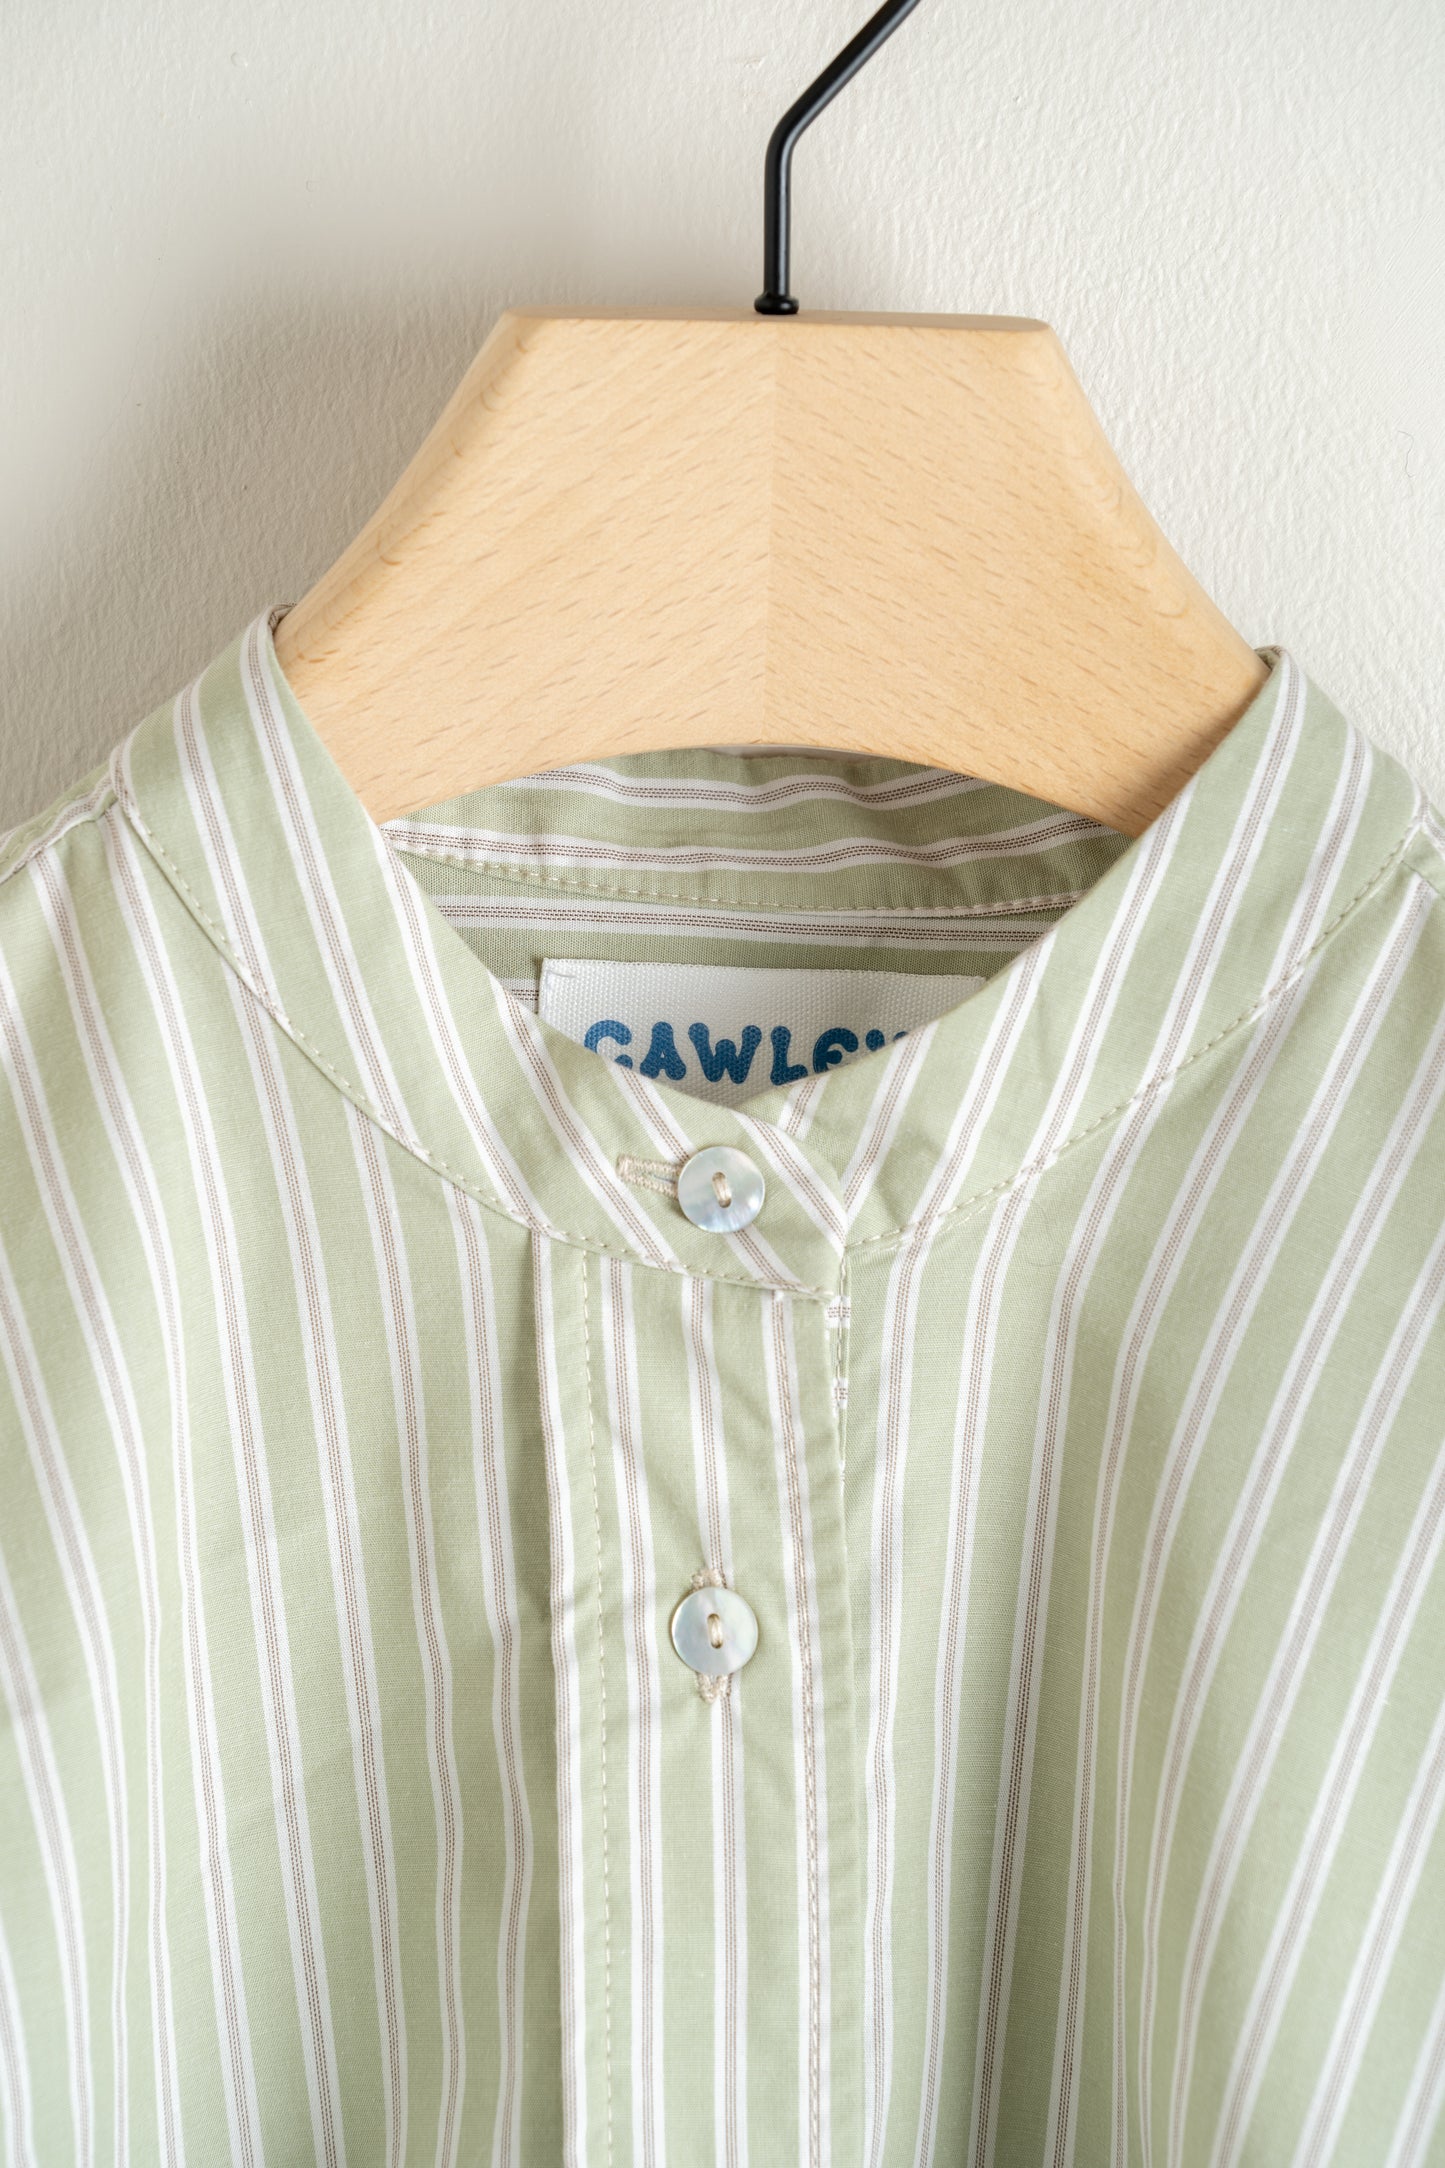 Cawley Studio Cotton Ines Shirt